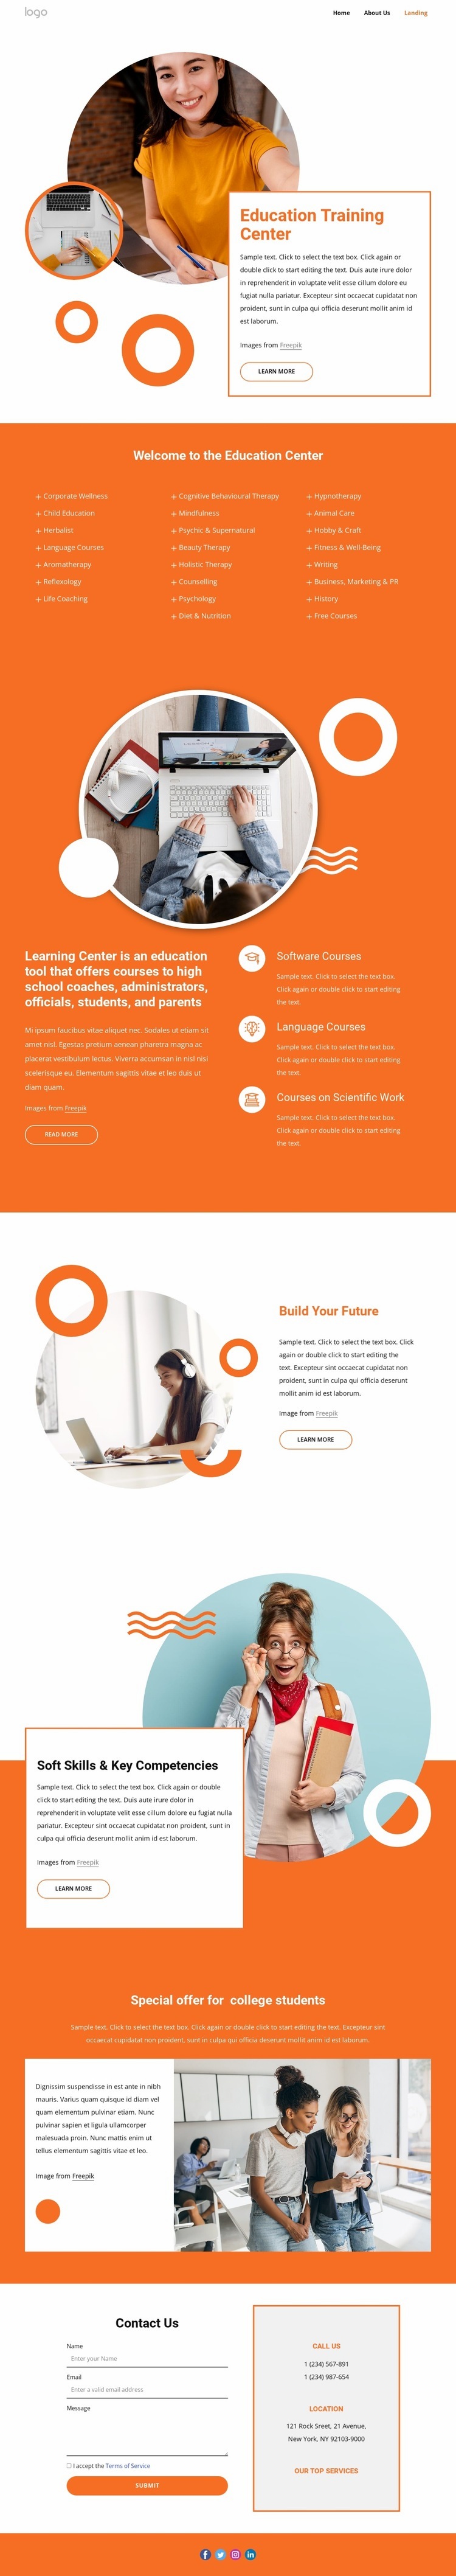 Education training center Homepage Design